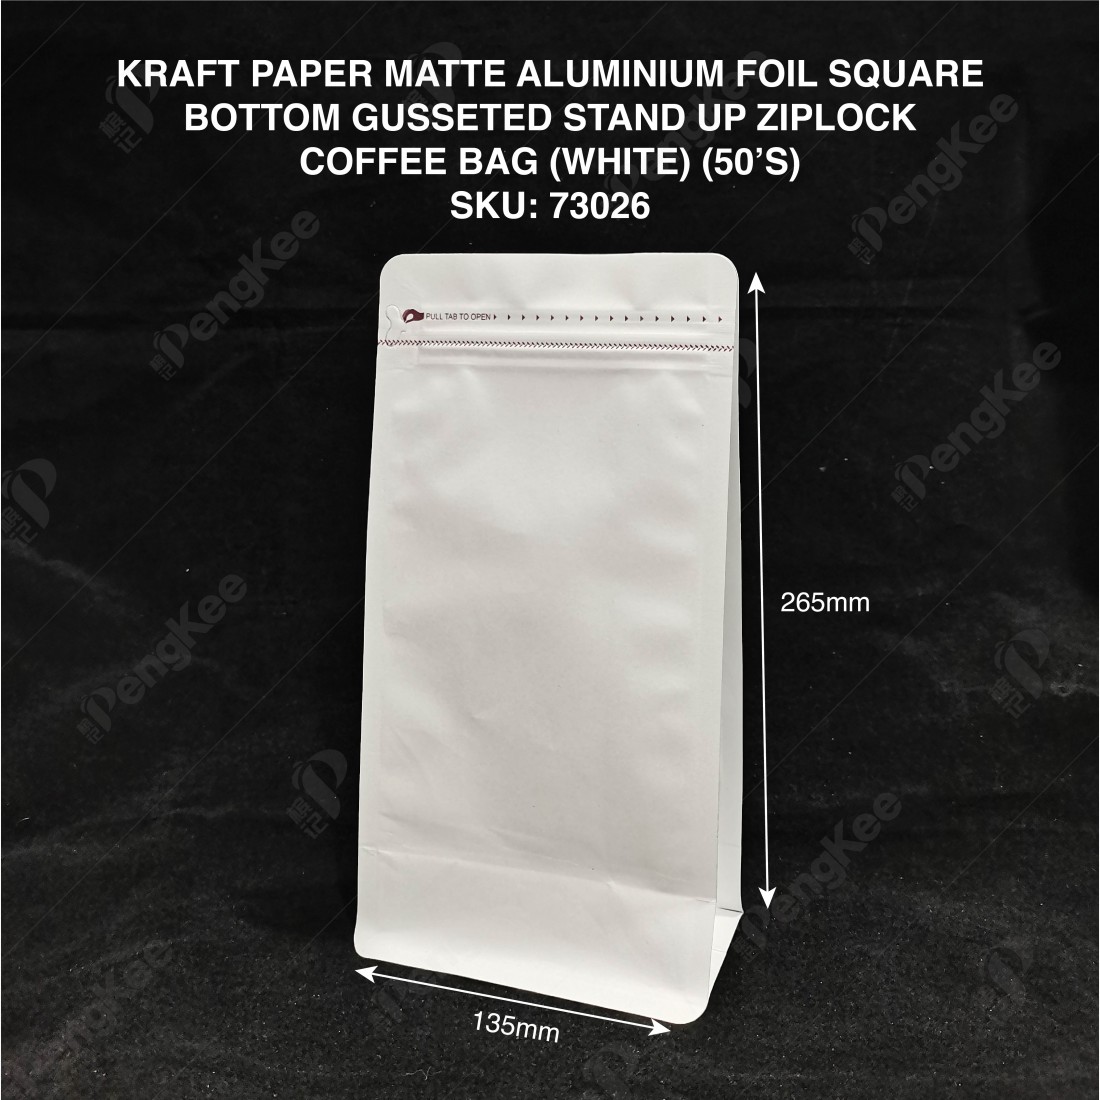 KRAFT PAPER MATTE ALUMINIUM FOIL SQUARE BOTTOM GUSSETED STAND UP ZIPLOCK COFFEE BAG (WHITE) 